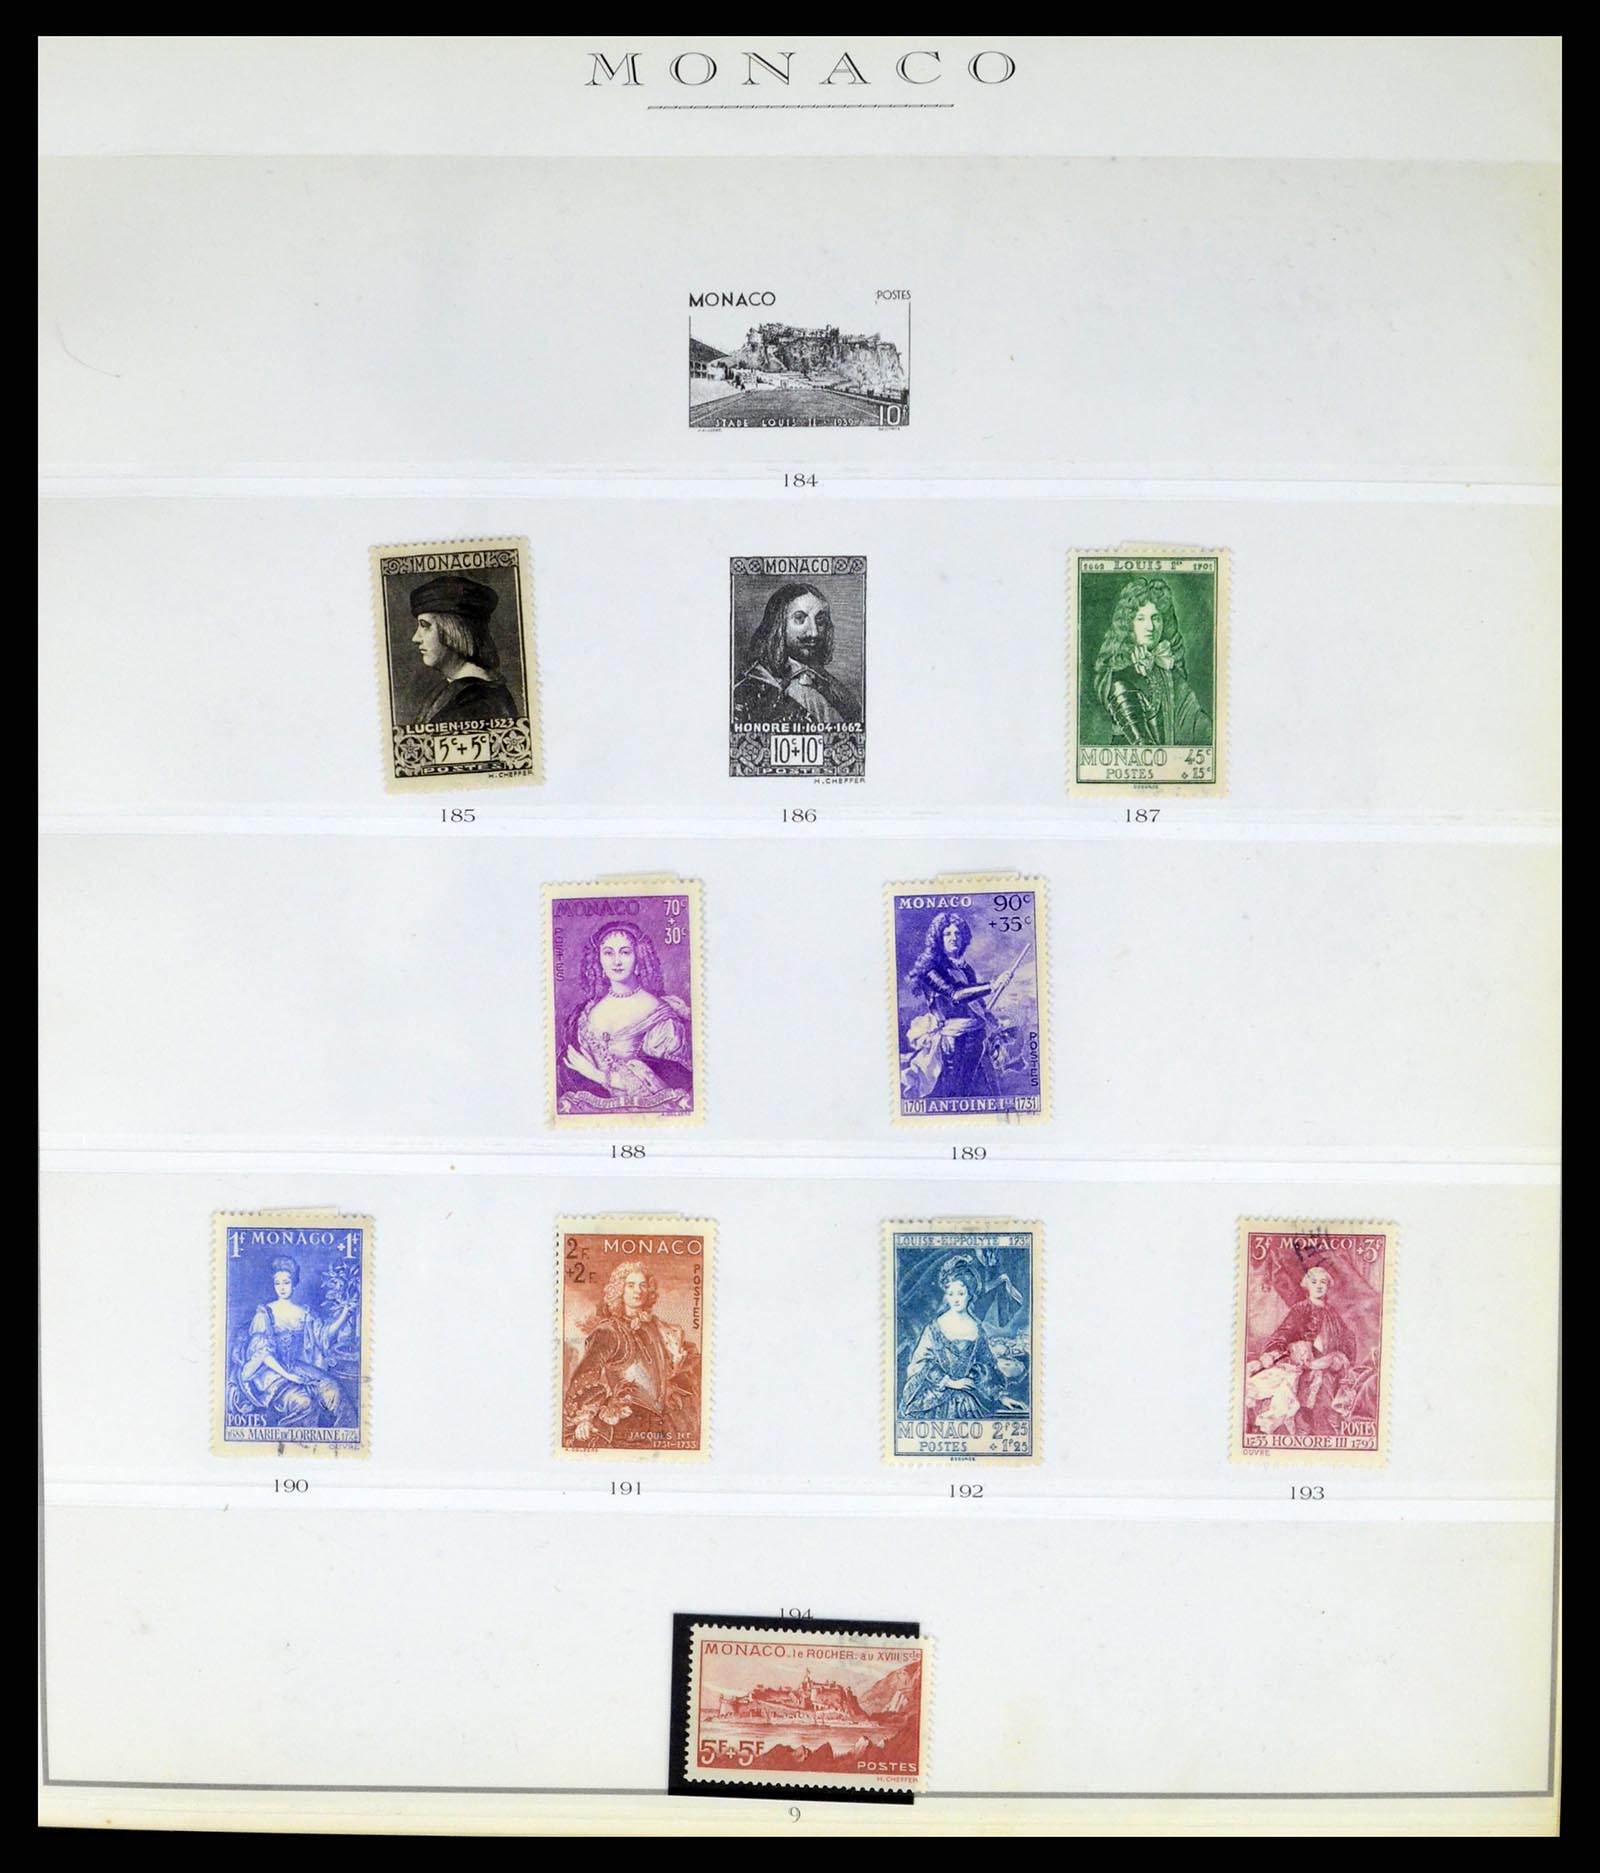 37437 017 - Stamp collection 37437 Monaco 1885-1996.